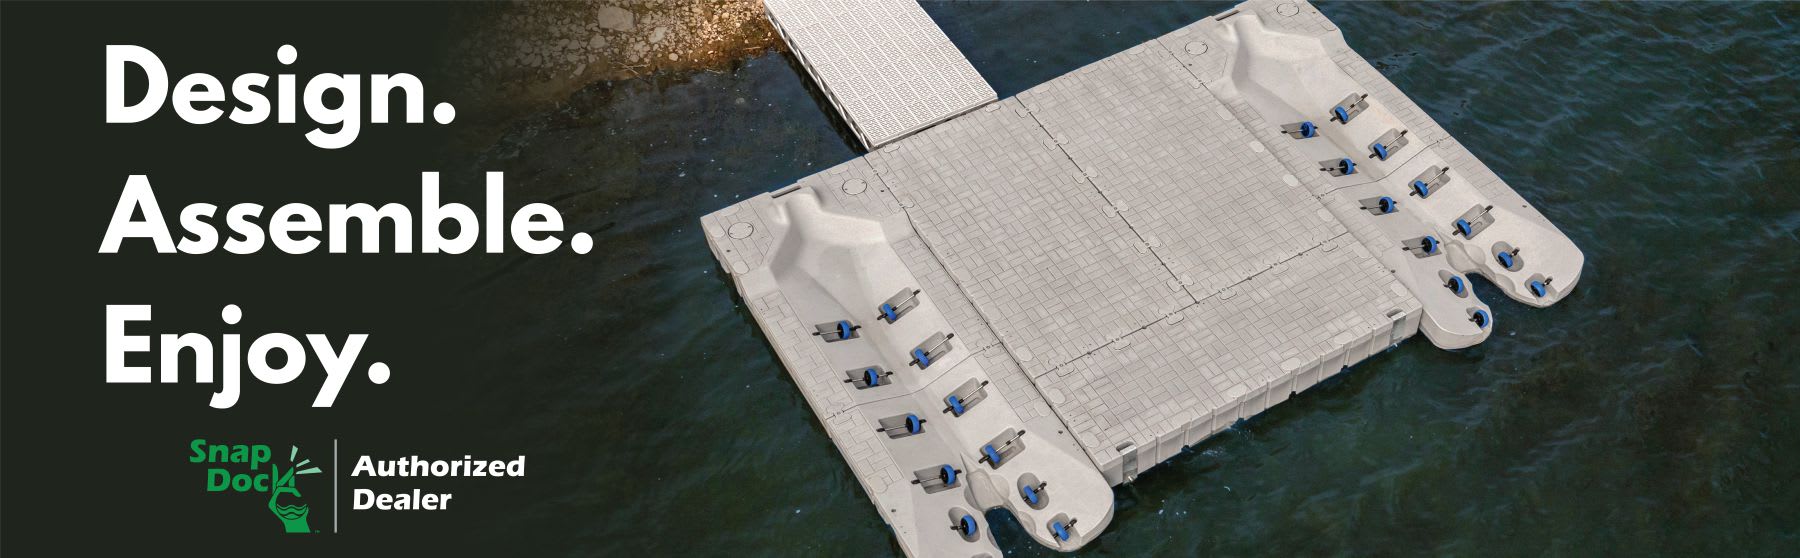 modular docks design, assemble, enjoy